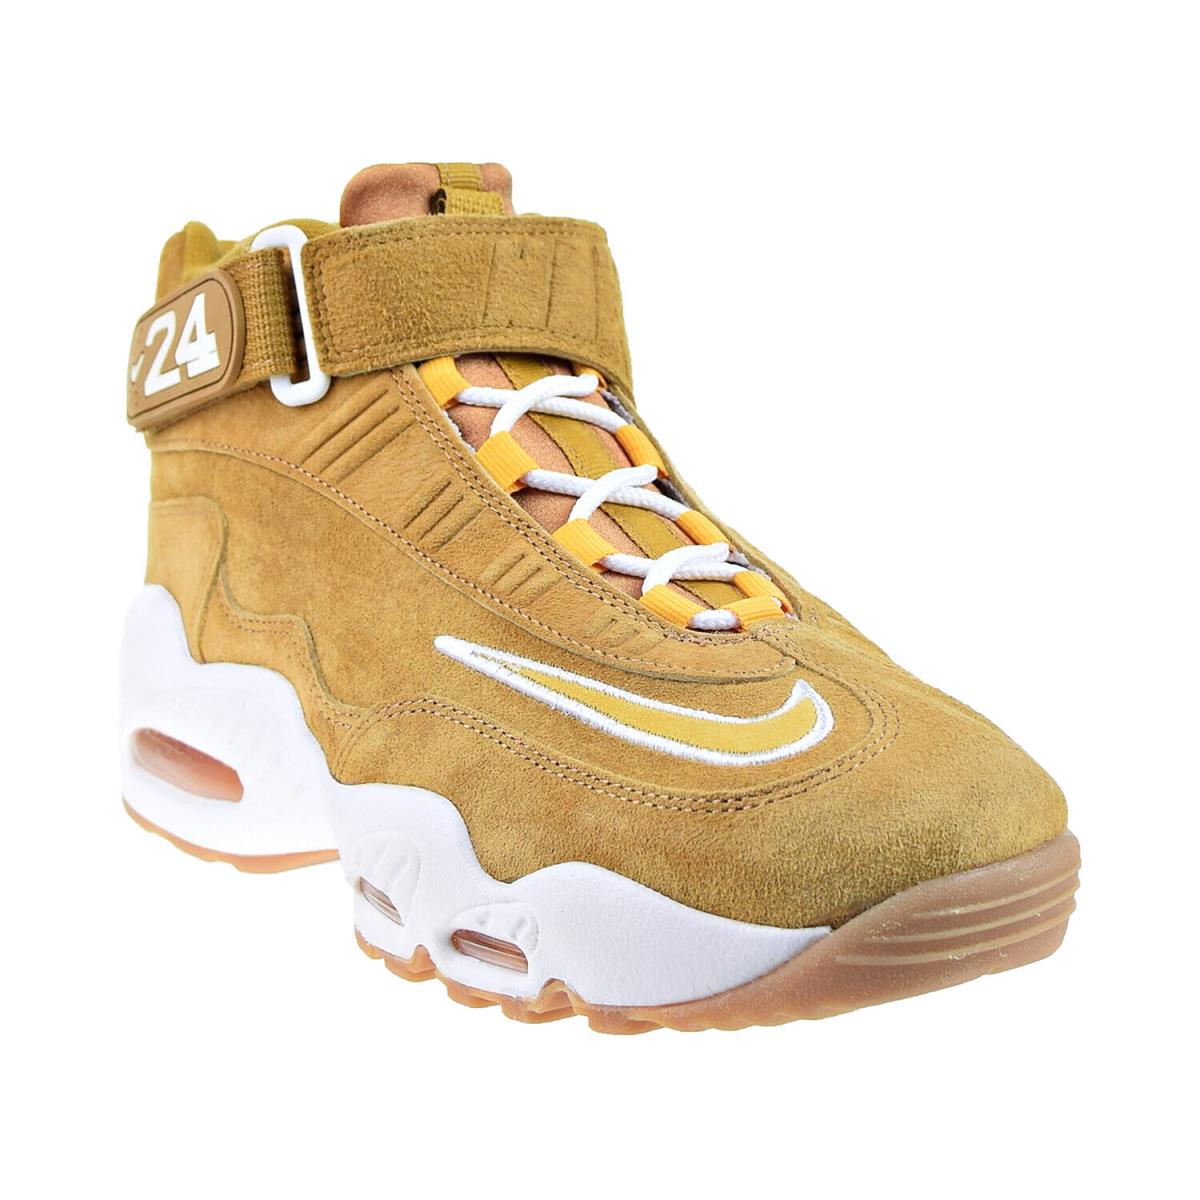 Nike Air Griffey Max 1 Men`s Shoes Wheat/white/gum Light Brown/pollen do6684-700 - Wheat/White/Gum Light Brown/Pollen